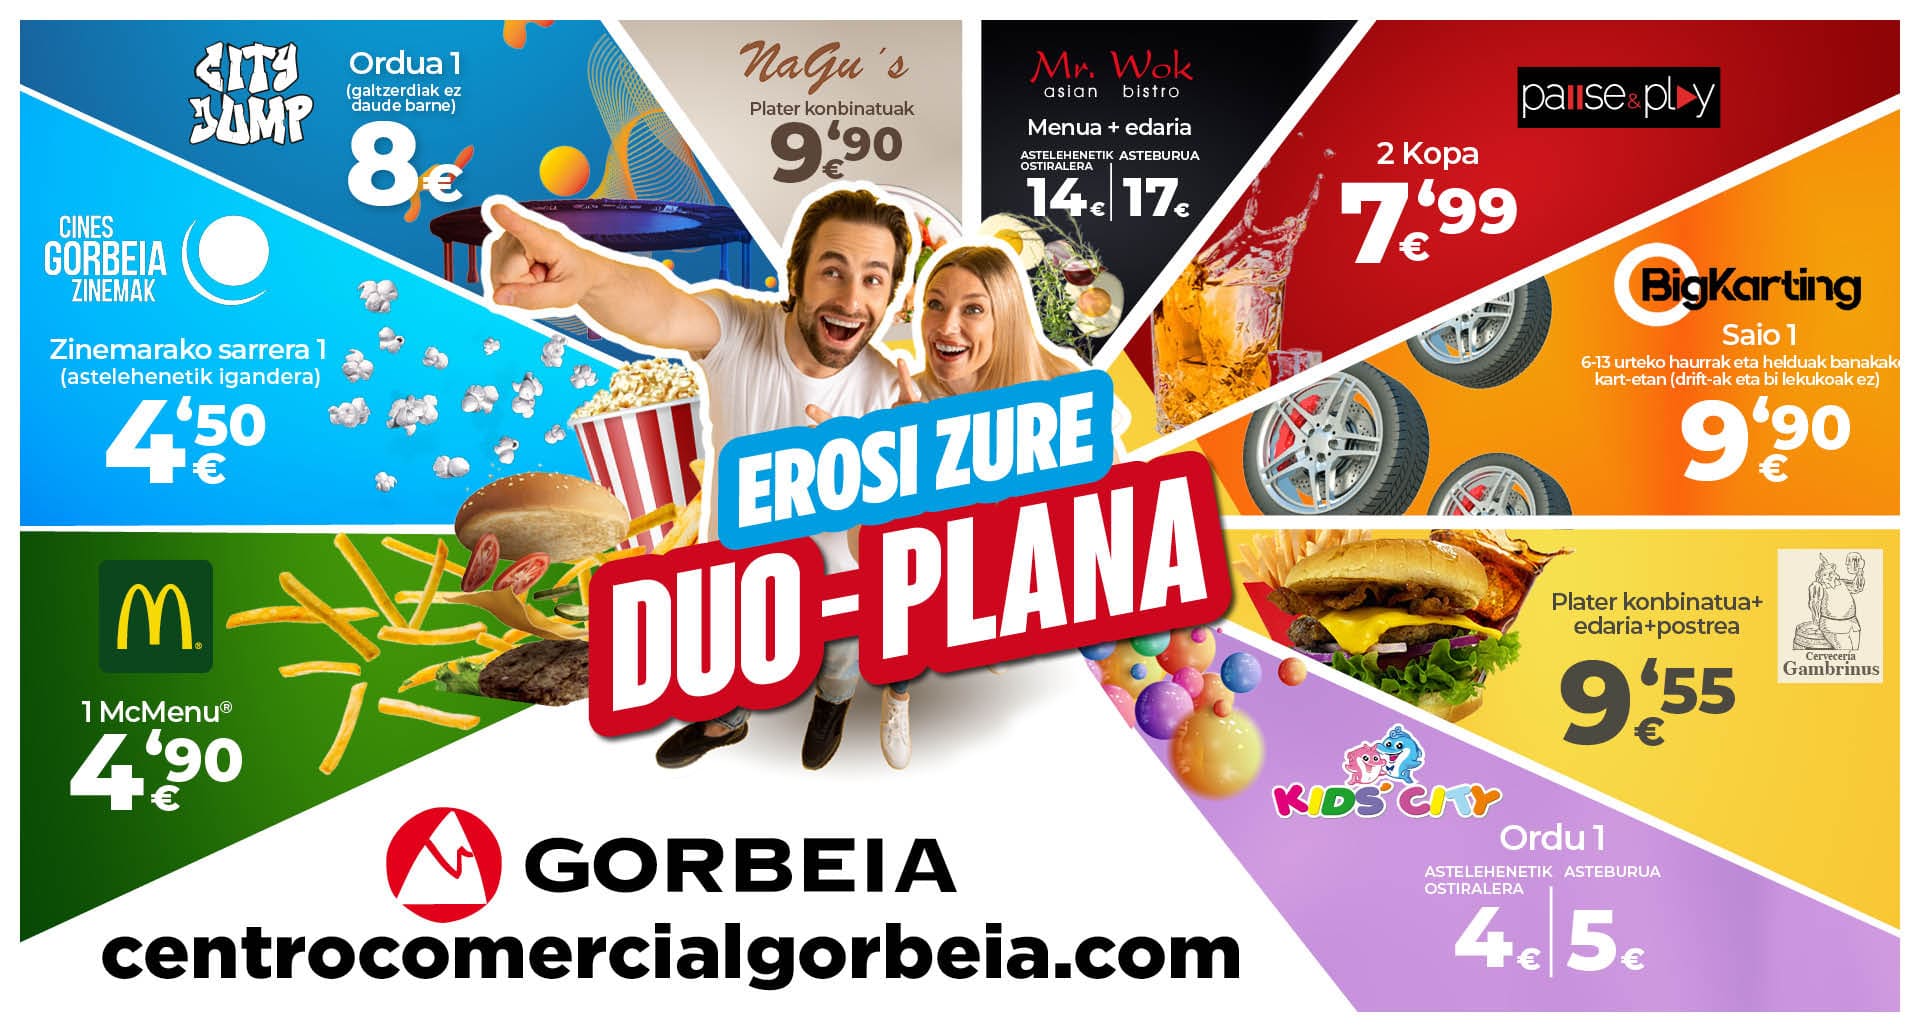 Gorbeiako Duo Plan